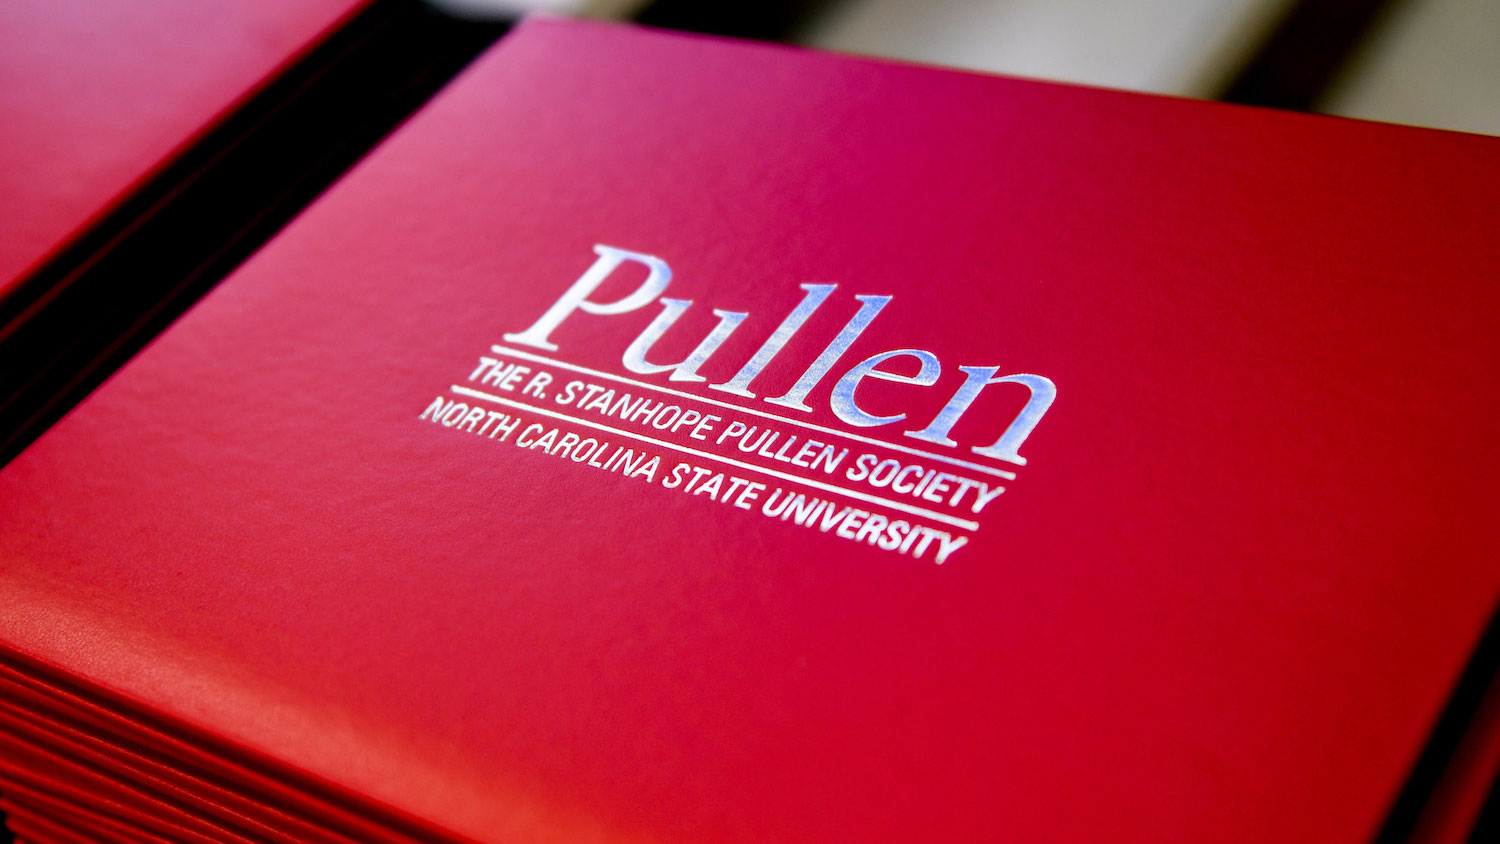 Pullen Society certificates.